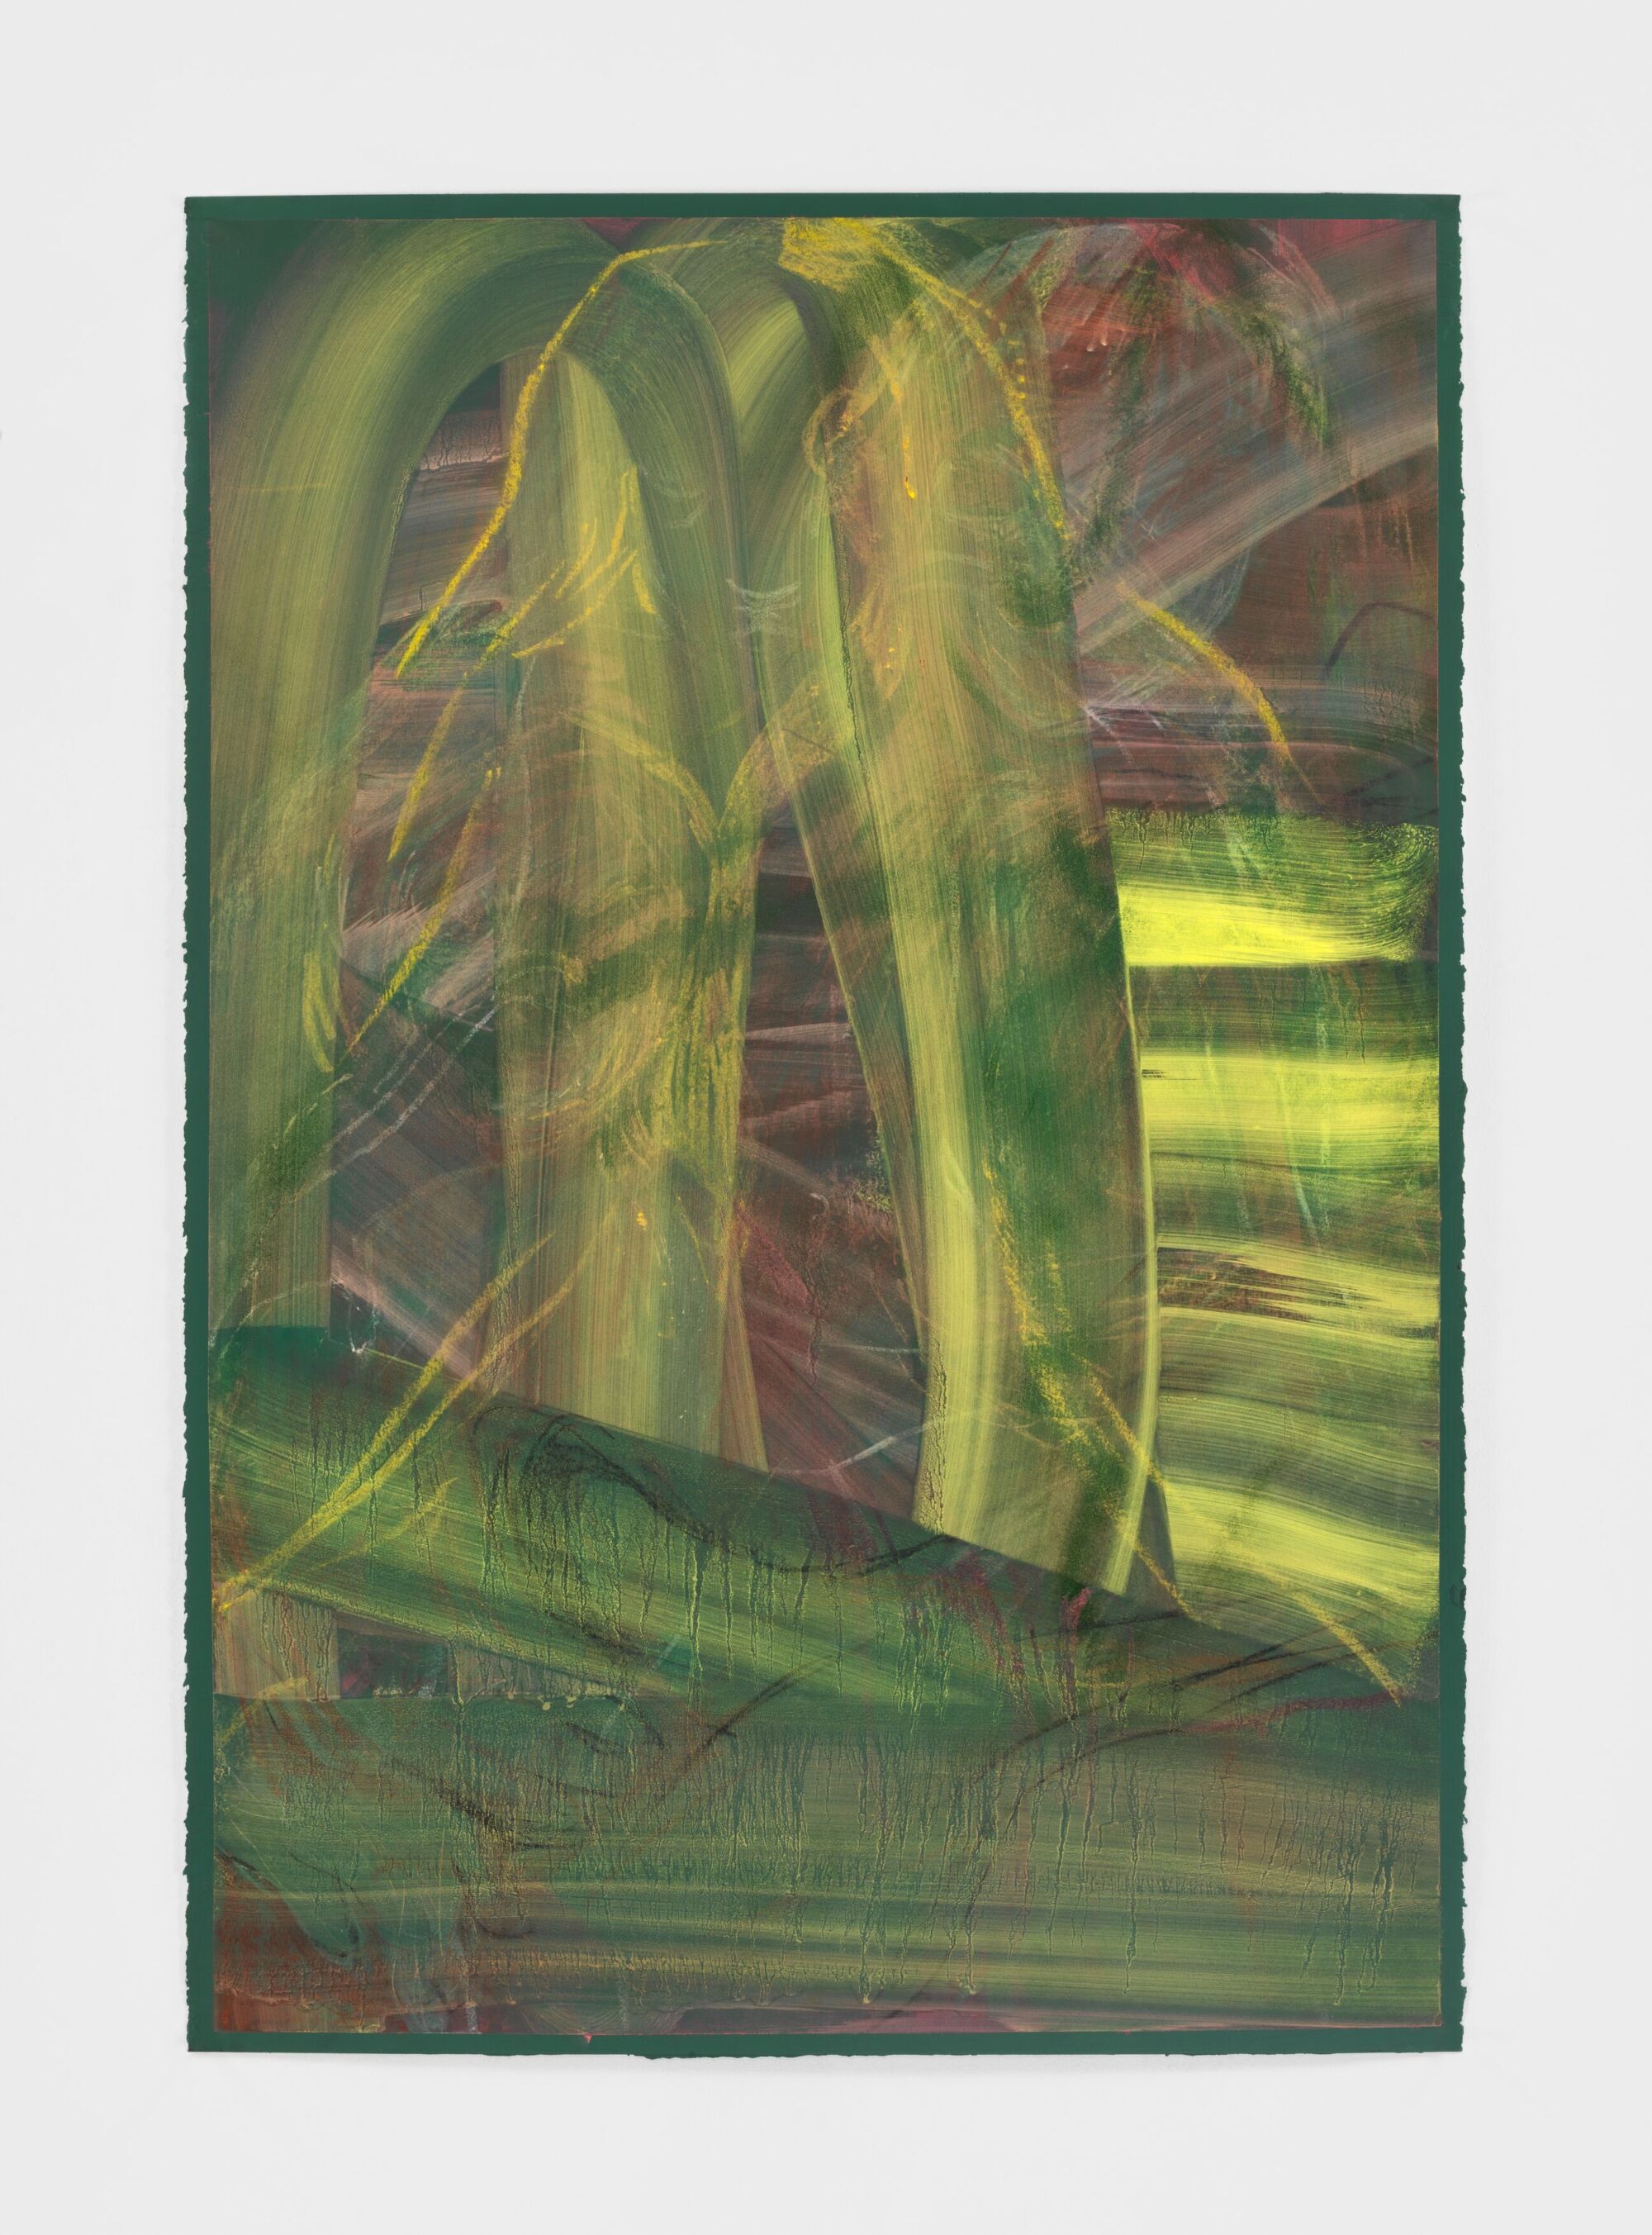 The Wick - Rita Ackermann
Flo Glow
2015
Acrylic, pastel pigment and spray paint on paper
111.8 x 76.2 cm / 44 x 30 inches
© Rita Ackermann
Courtesy the artist and Hauser & Wirth
Photo: EPW Studio
